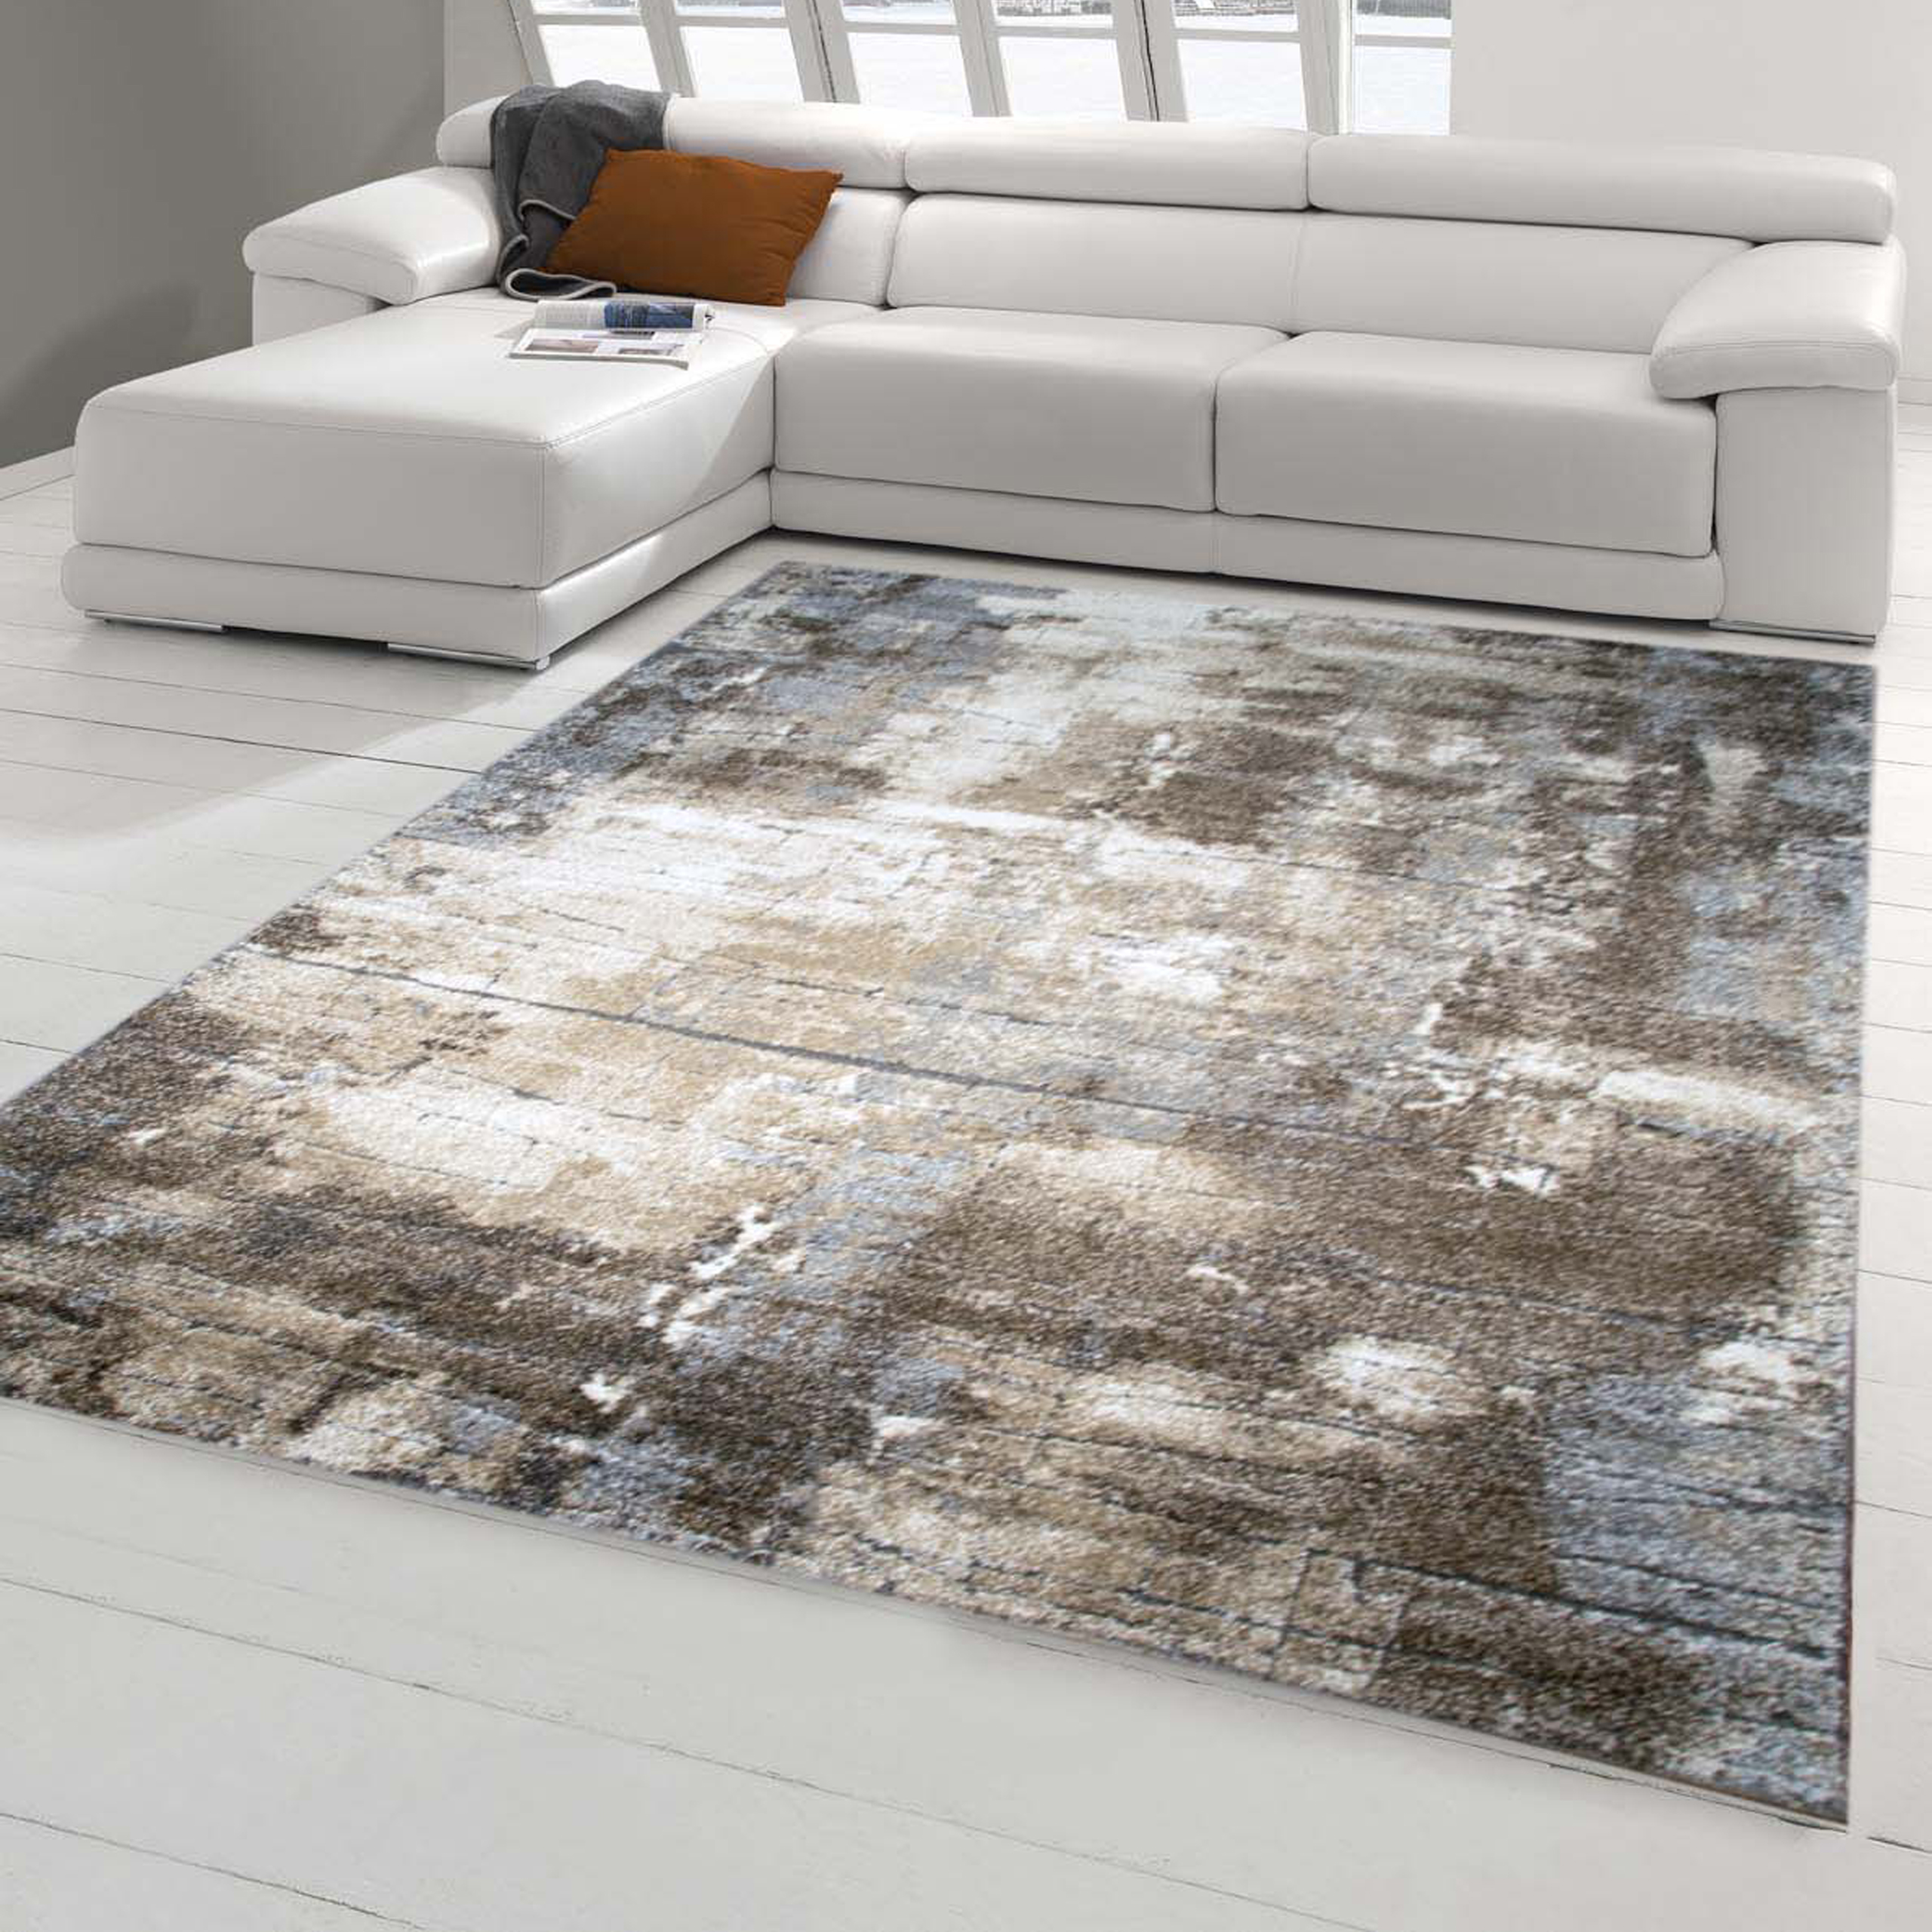 High-quality cheap carpets: -Traum dreams designer & Teppich at - Modern carpet and